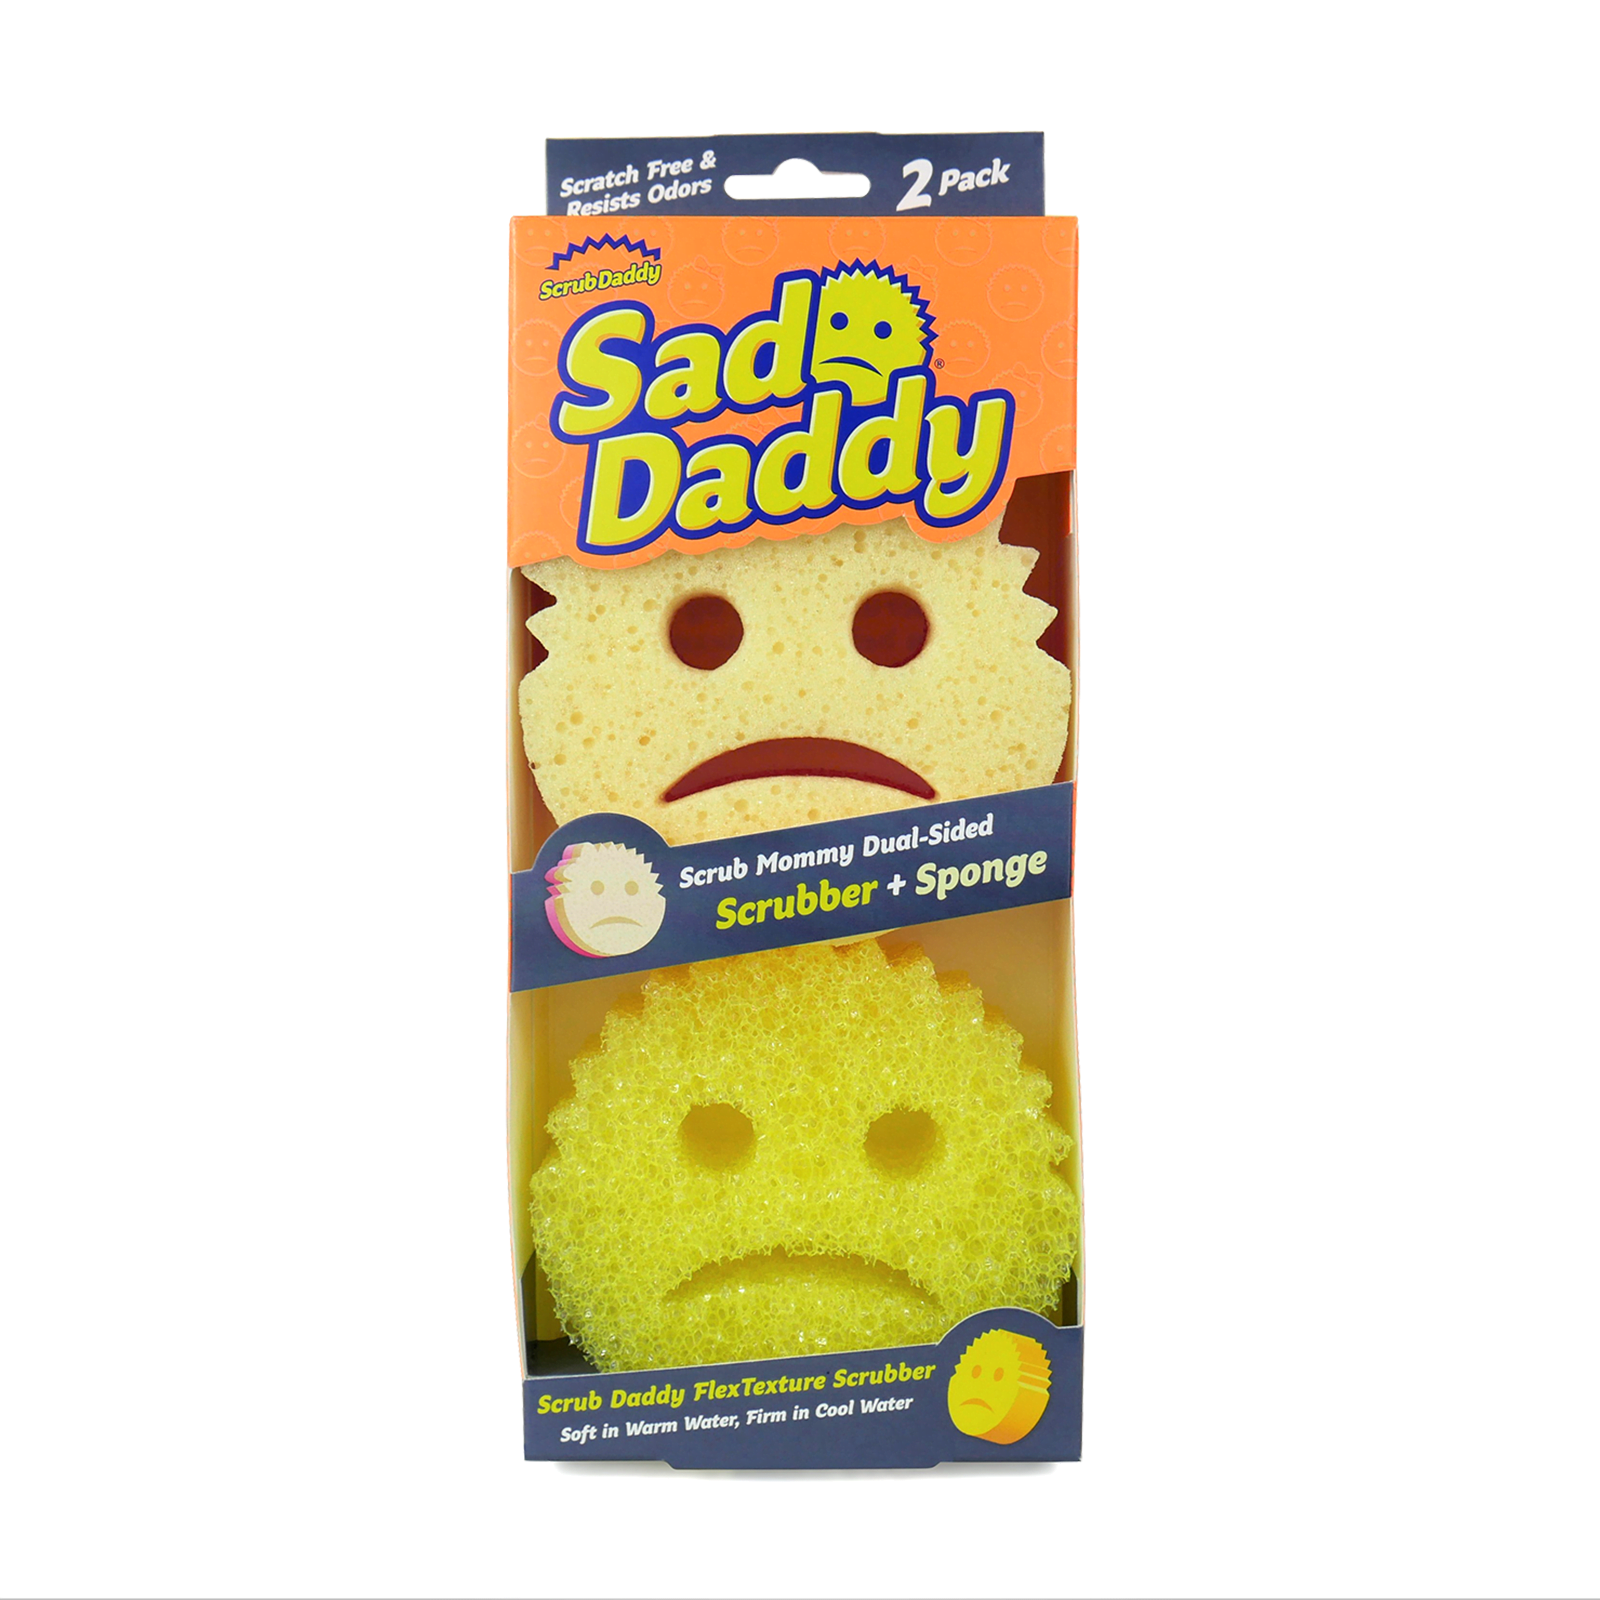 https://scrubdaddy.co.uk/wp-content/uploads/2023/05/Sad-Daddy_2ct_1.png